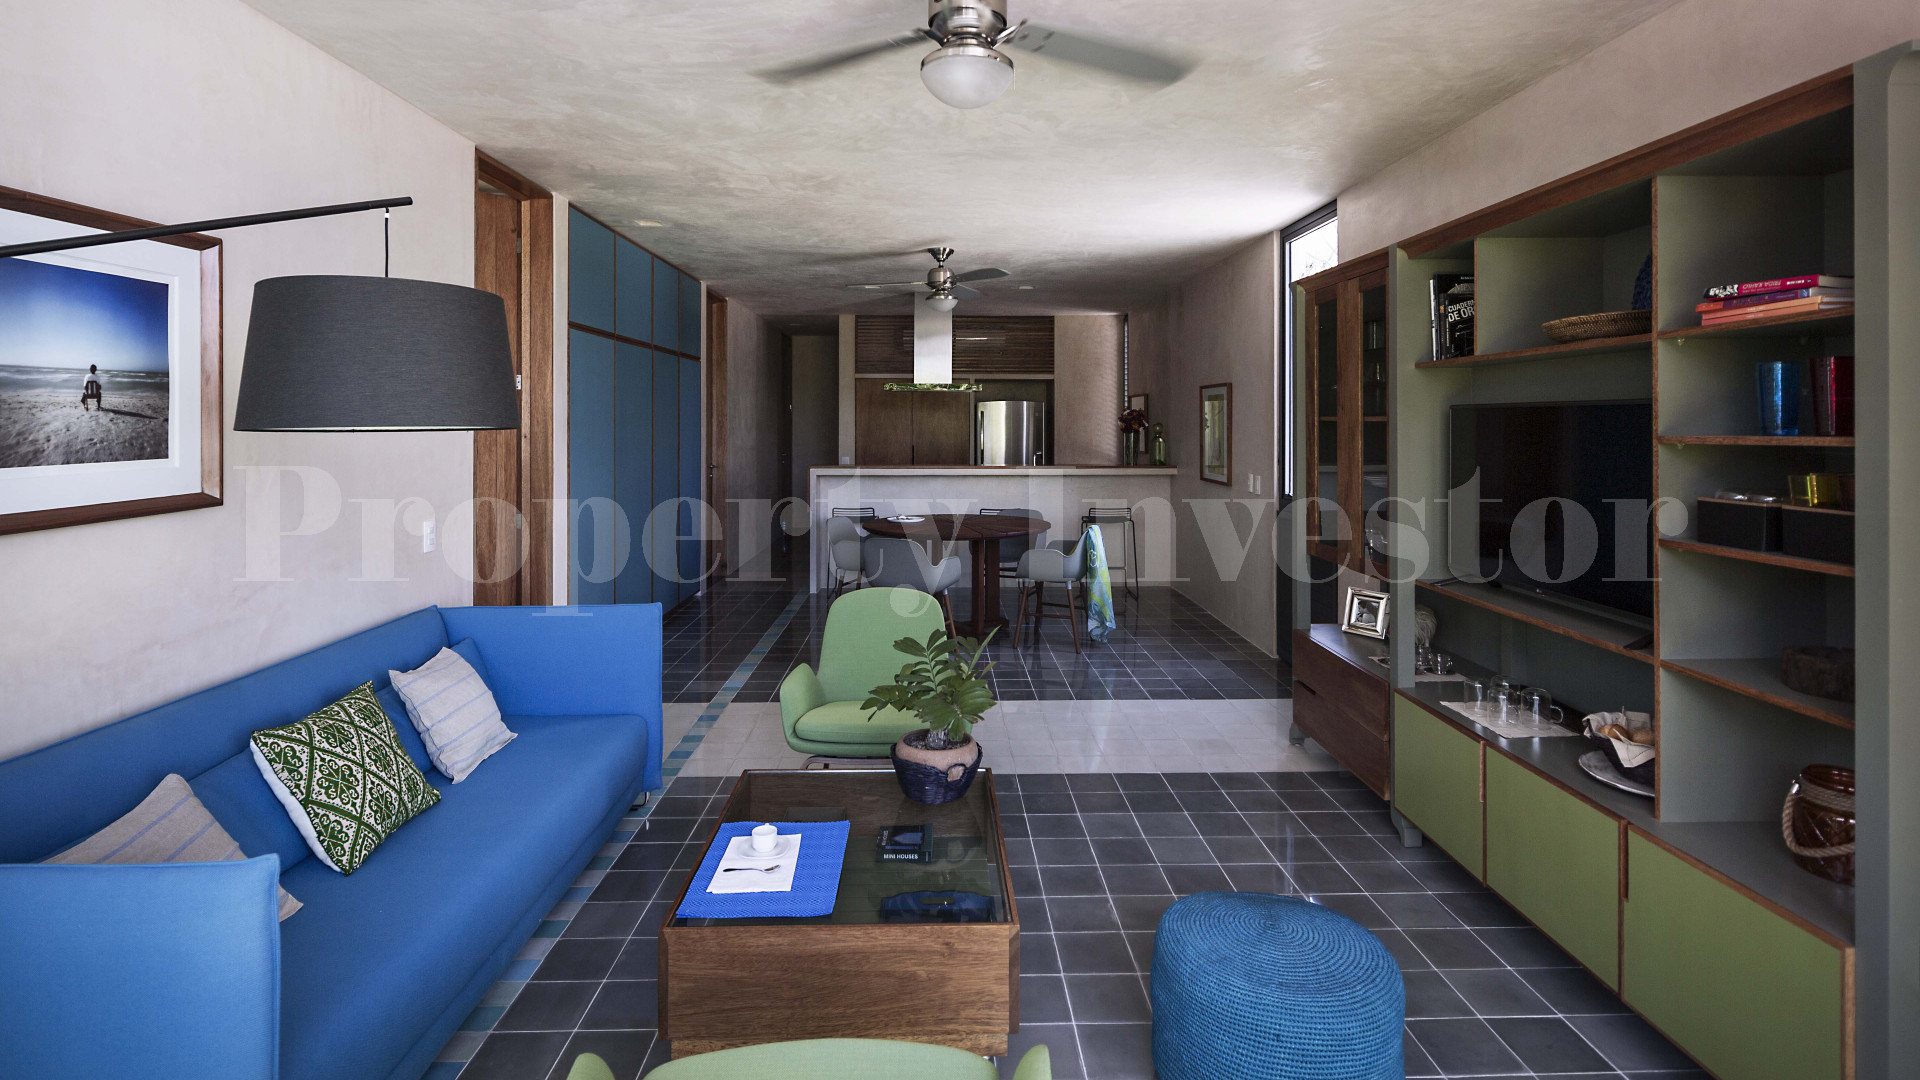 2 Bedroom Boutique Apartment in Playa Del Carmen (Unit 103)